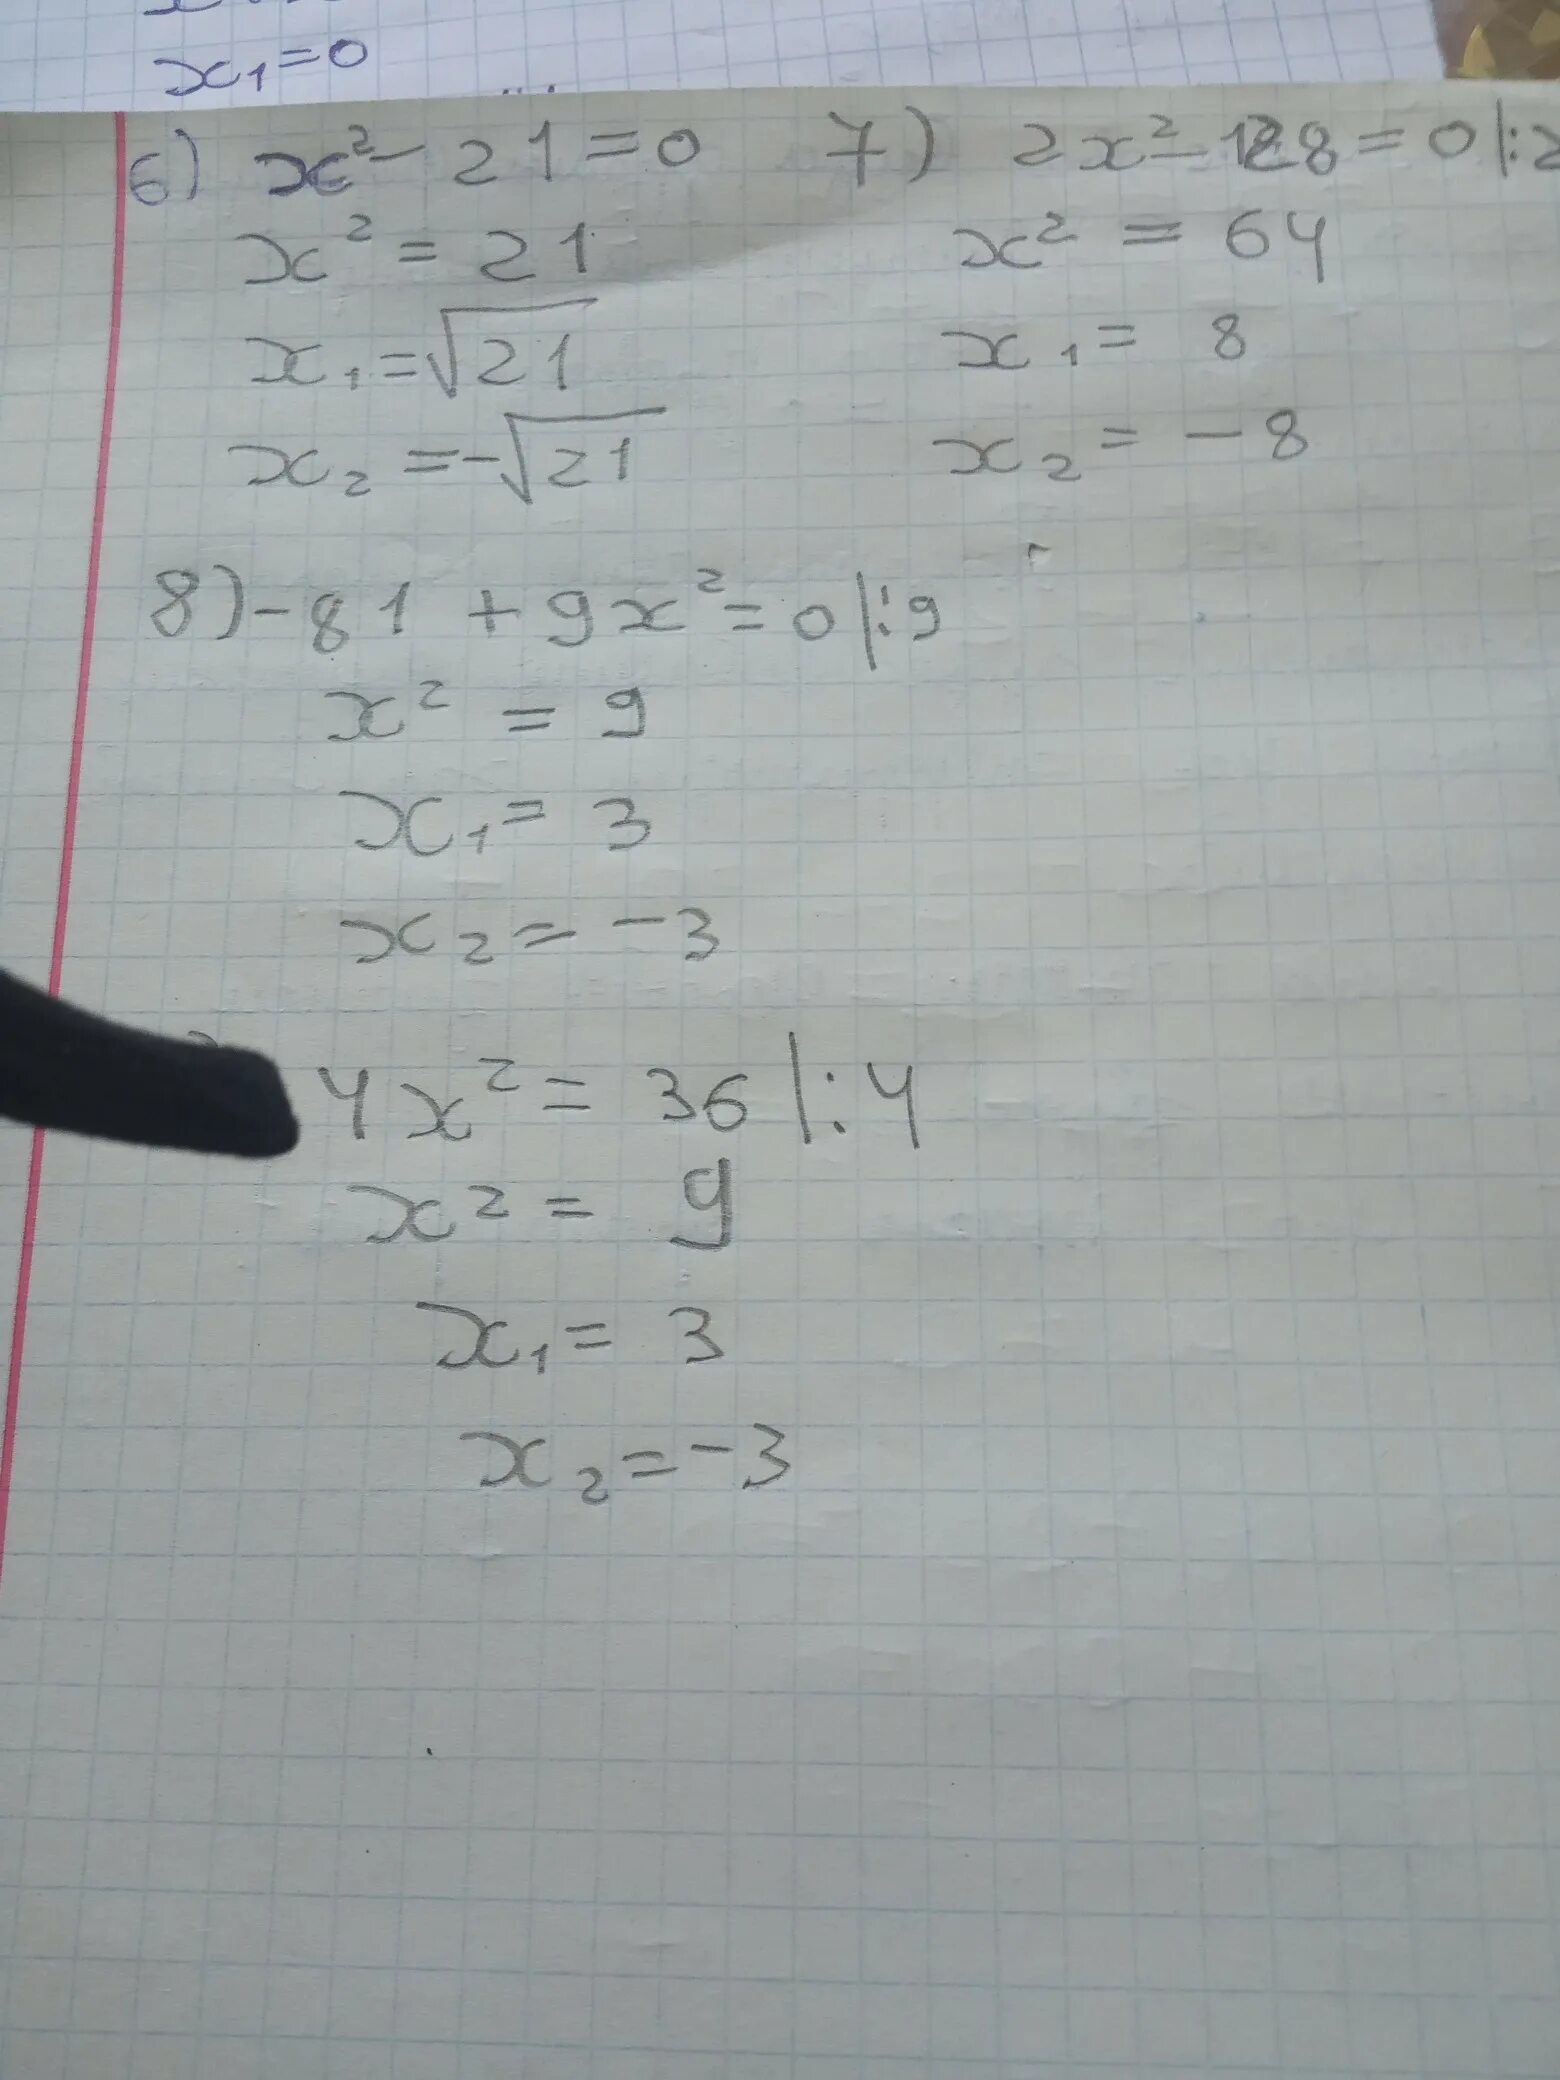 6x 21 0. X2+3x-28. 5x^2+9x=0. X2/x2-9 12-x/x2-9. 3x 81 решение.